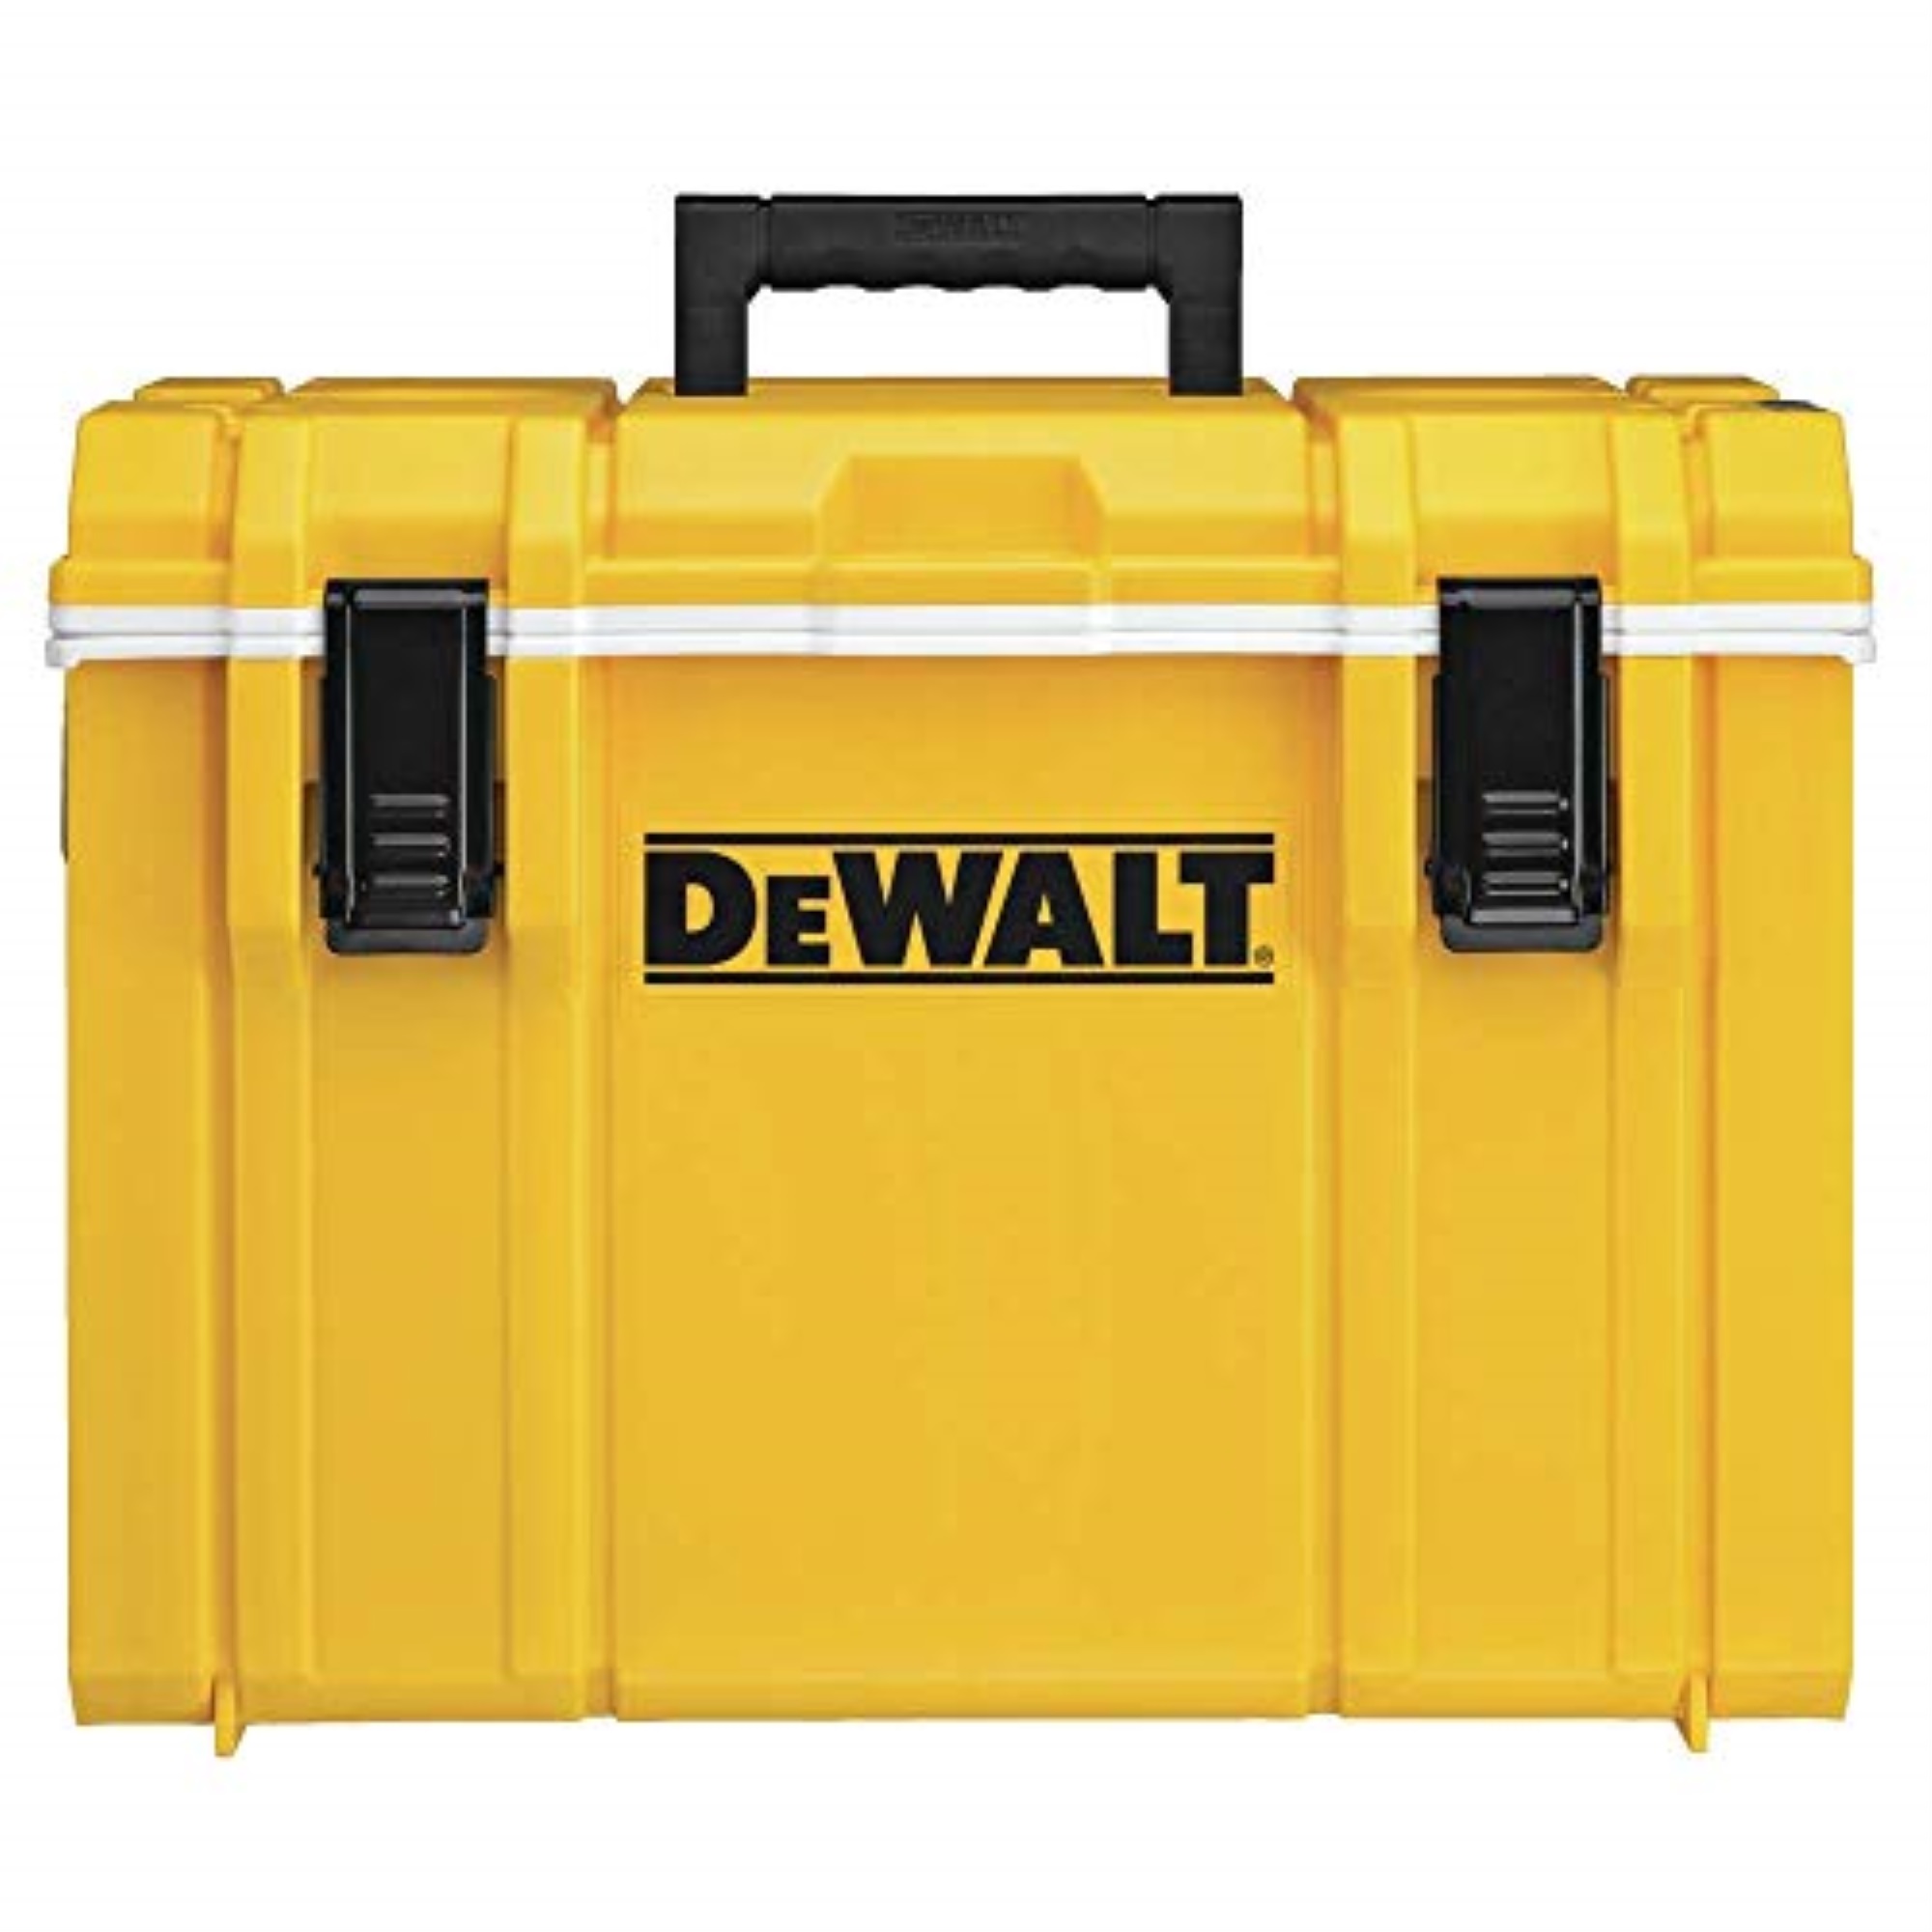 DeWalt 8075257 COOLER BLK/YLW 88LB DeWalt ToughSystem Black/Yellow 88 lb Cooler